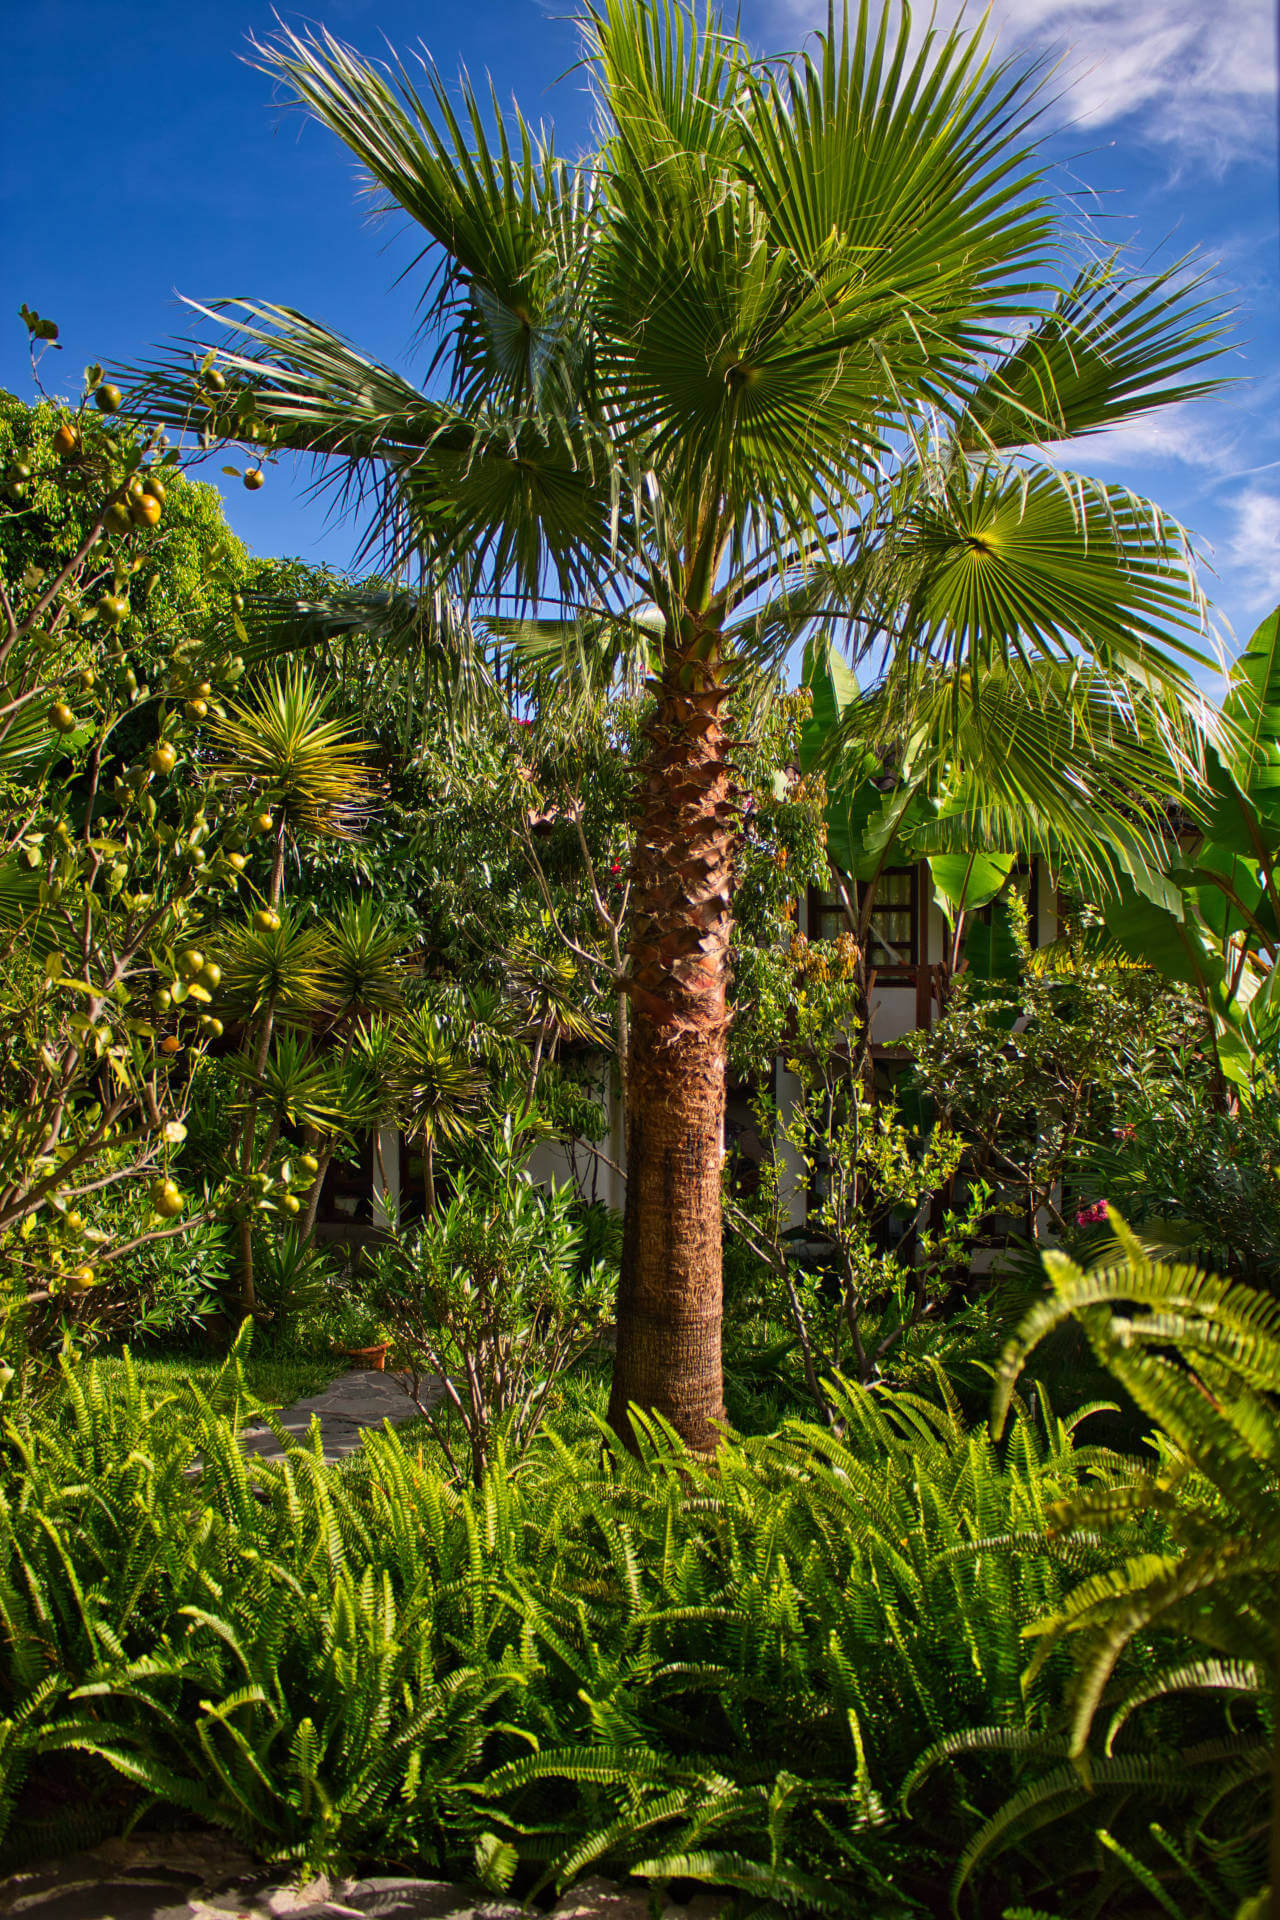 The Casa Lobo Bungalows garden is located in San Pedro la Laguna at the Lake Atitlán in Guatemala.